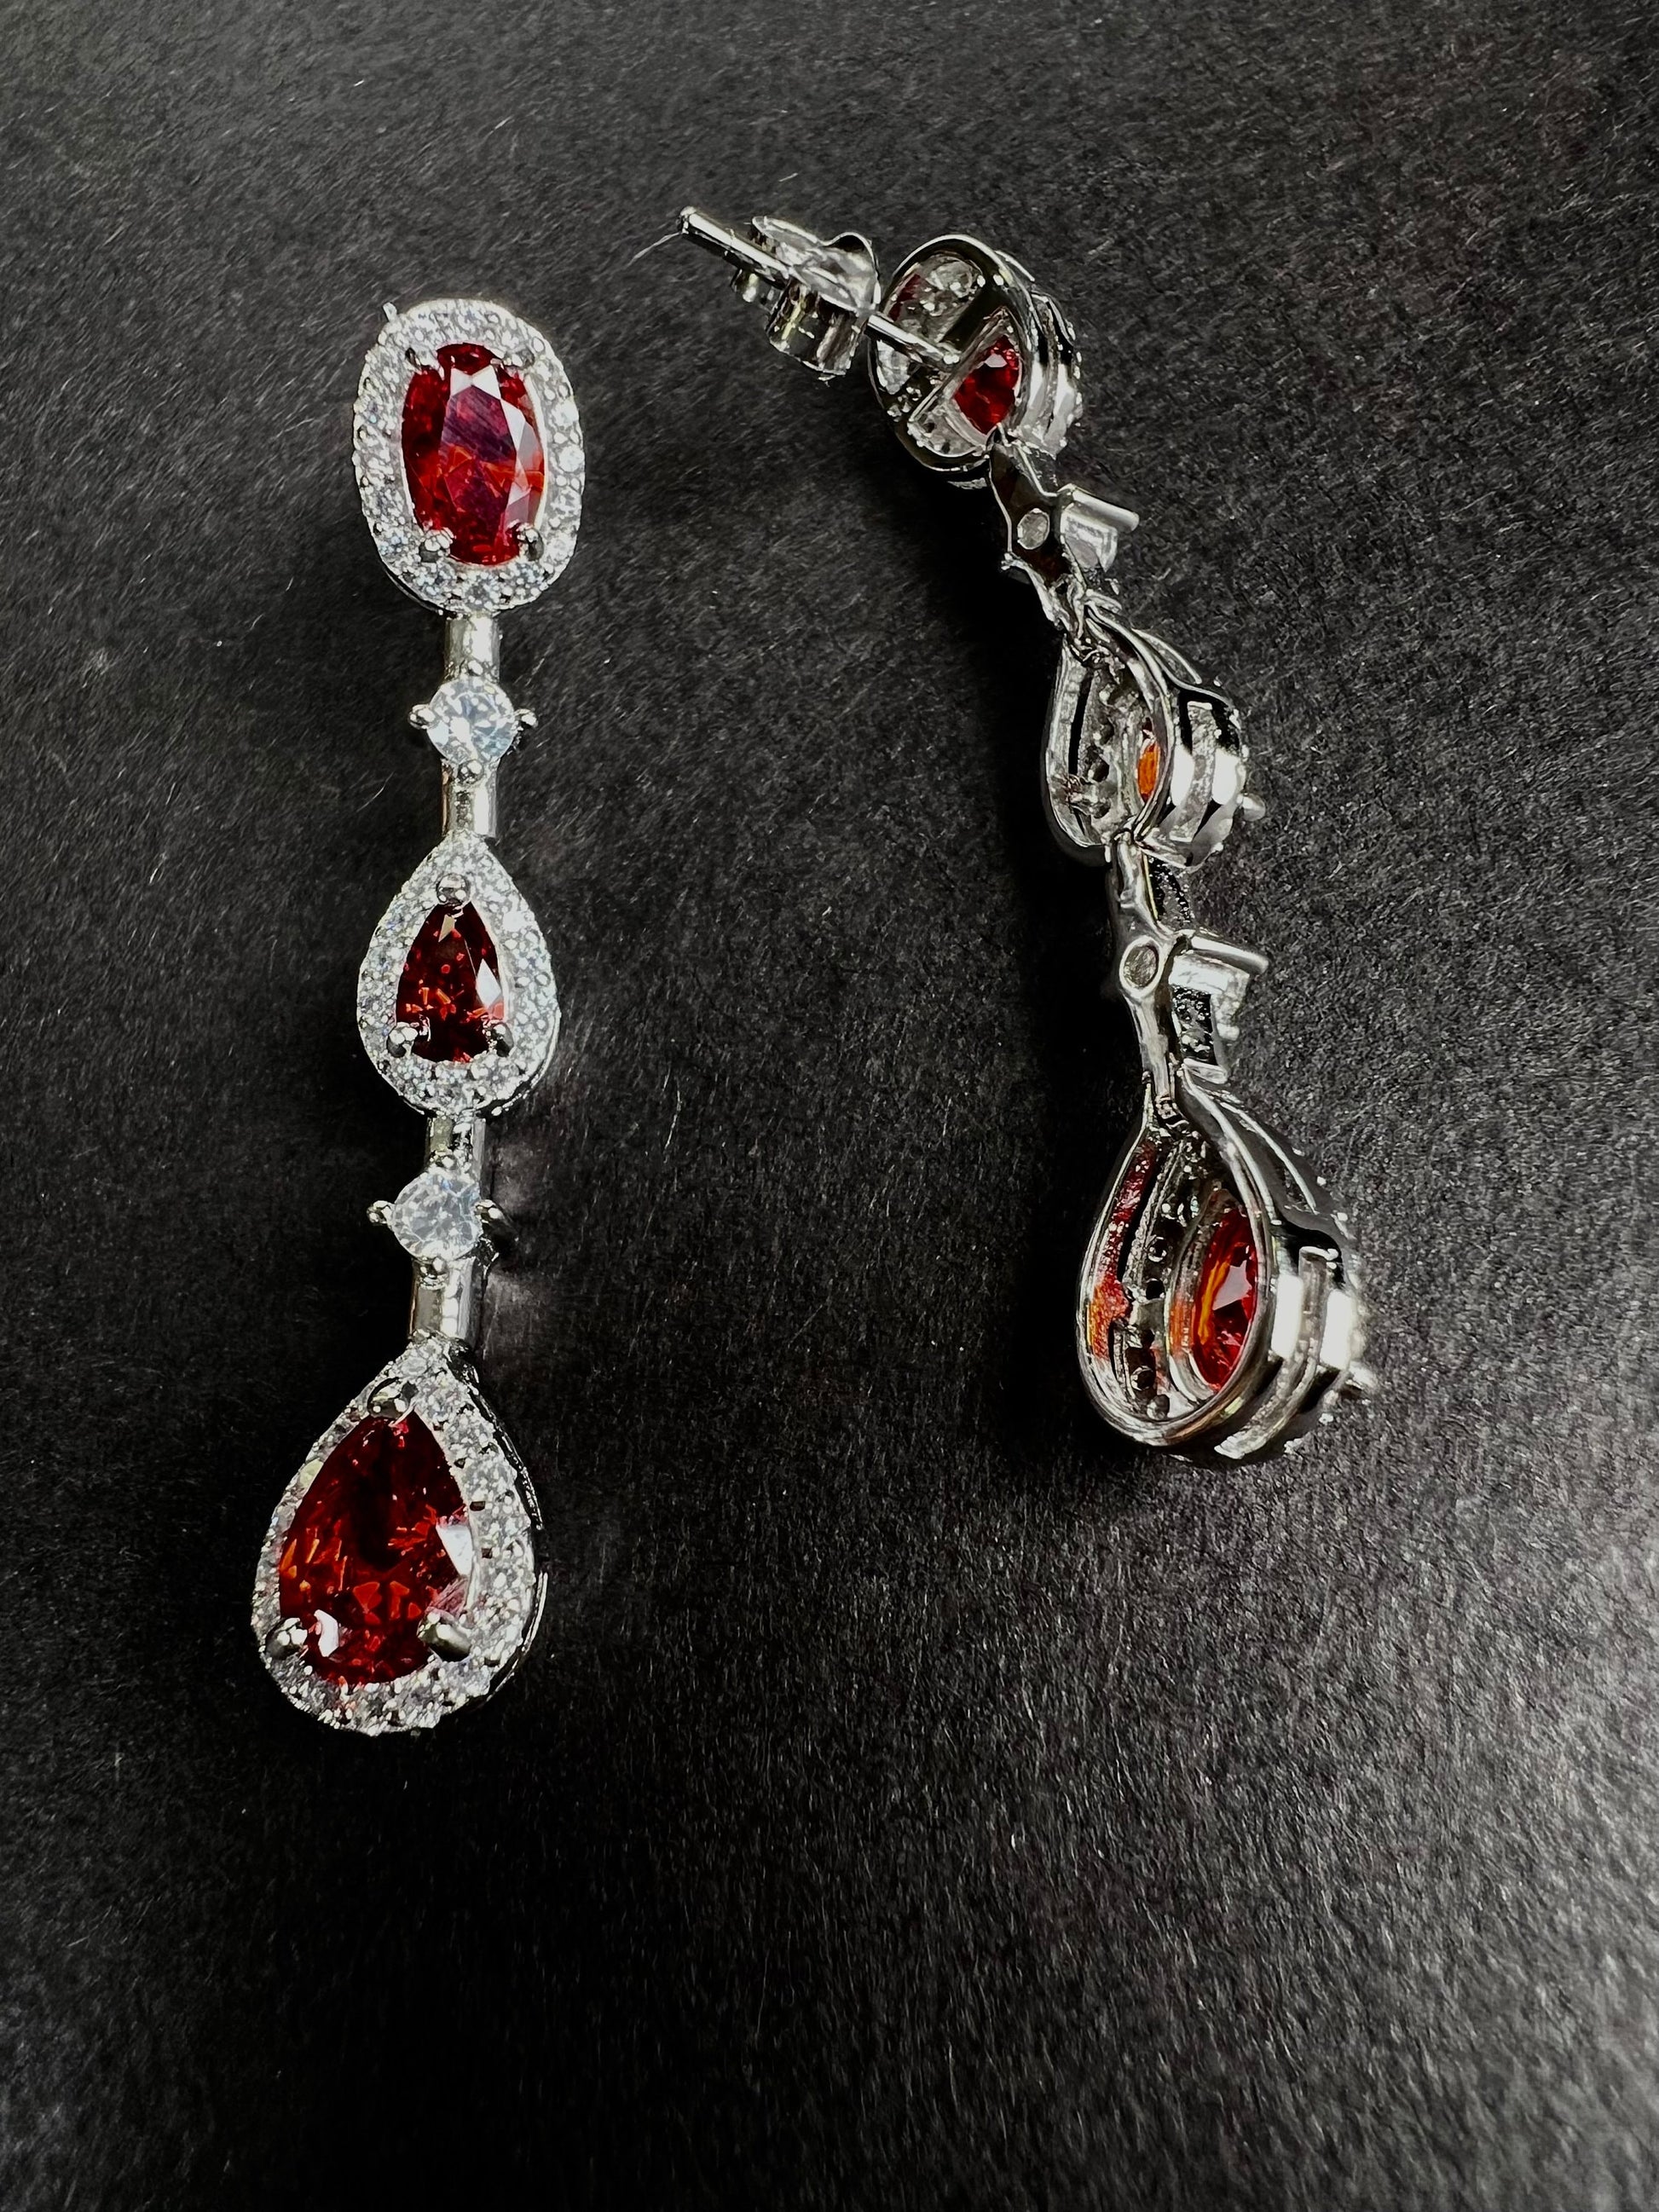 Garnet 925 Sterling Silver earrings. Mozambique Garnet Teadrop 6x40mm dangling on CZ diamond setting Earrings, 925 stamped, gift for her